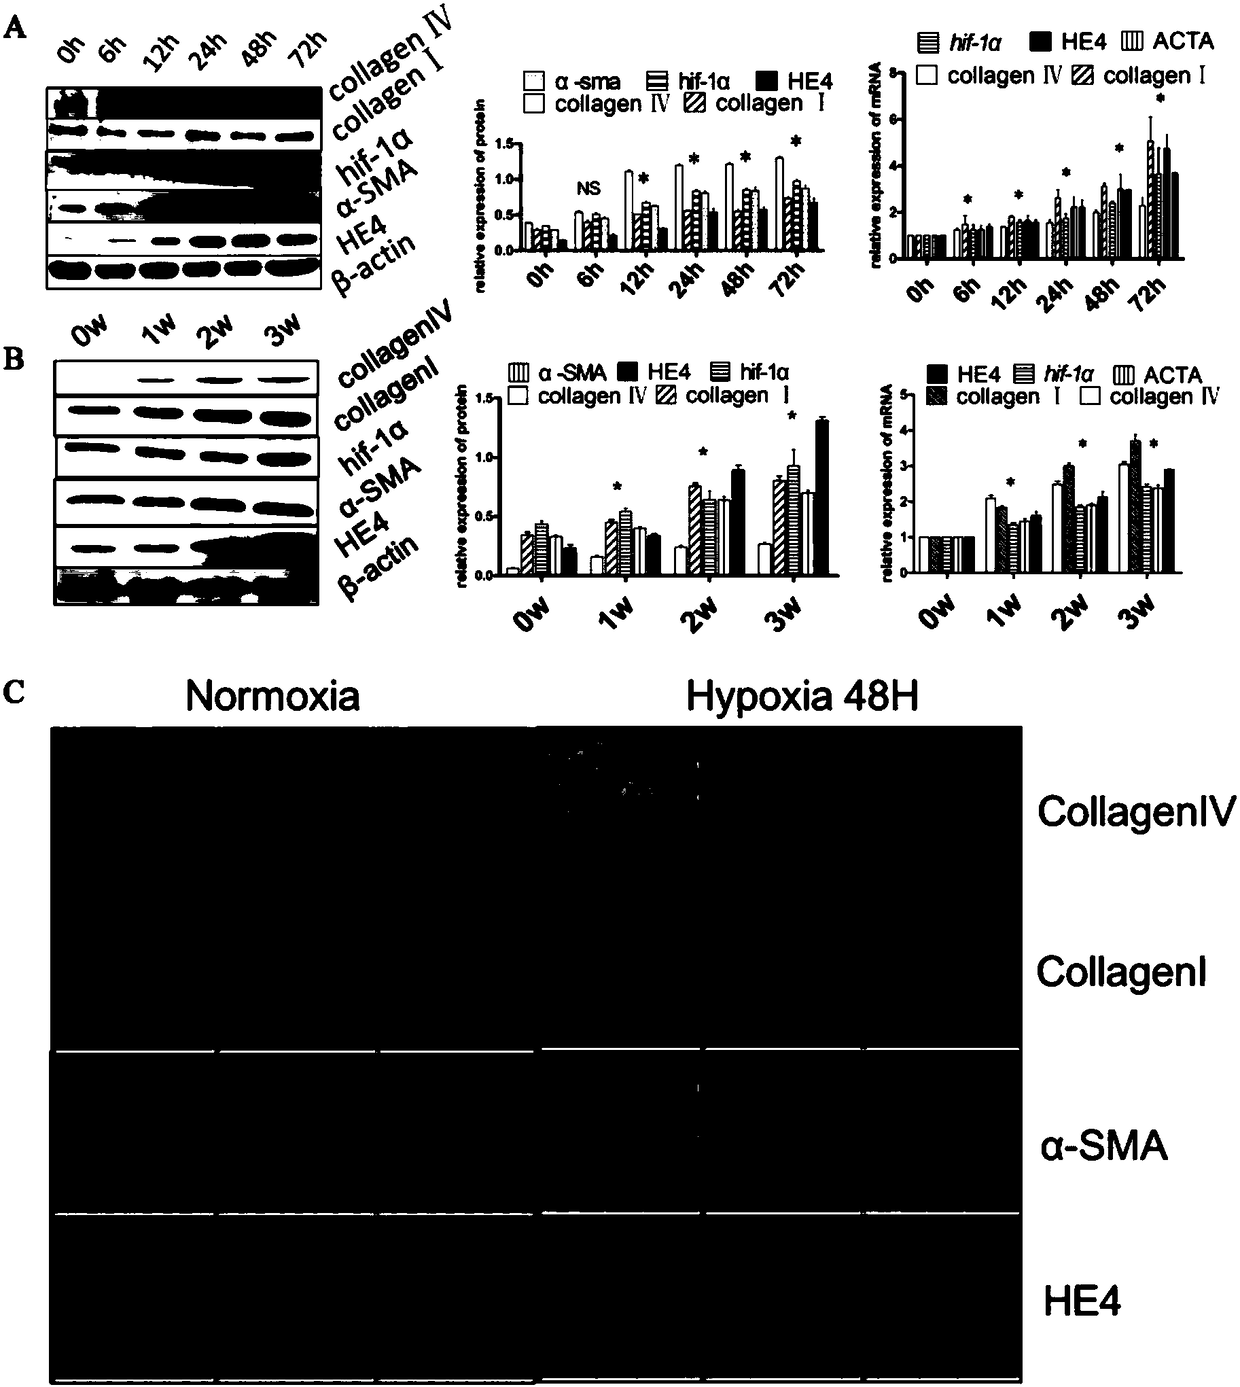 Application of human epididymal protein 4 in preparation of NF-[kappa]B agonist